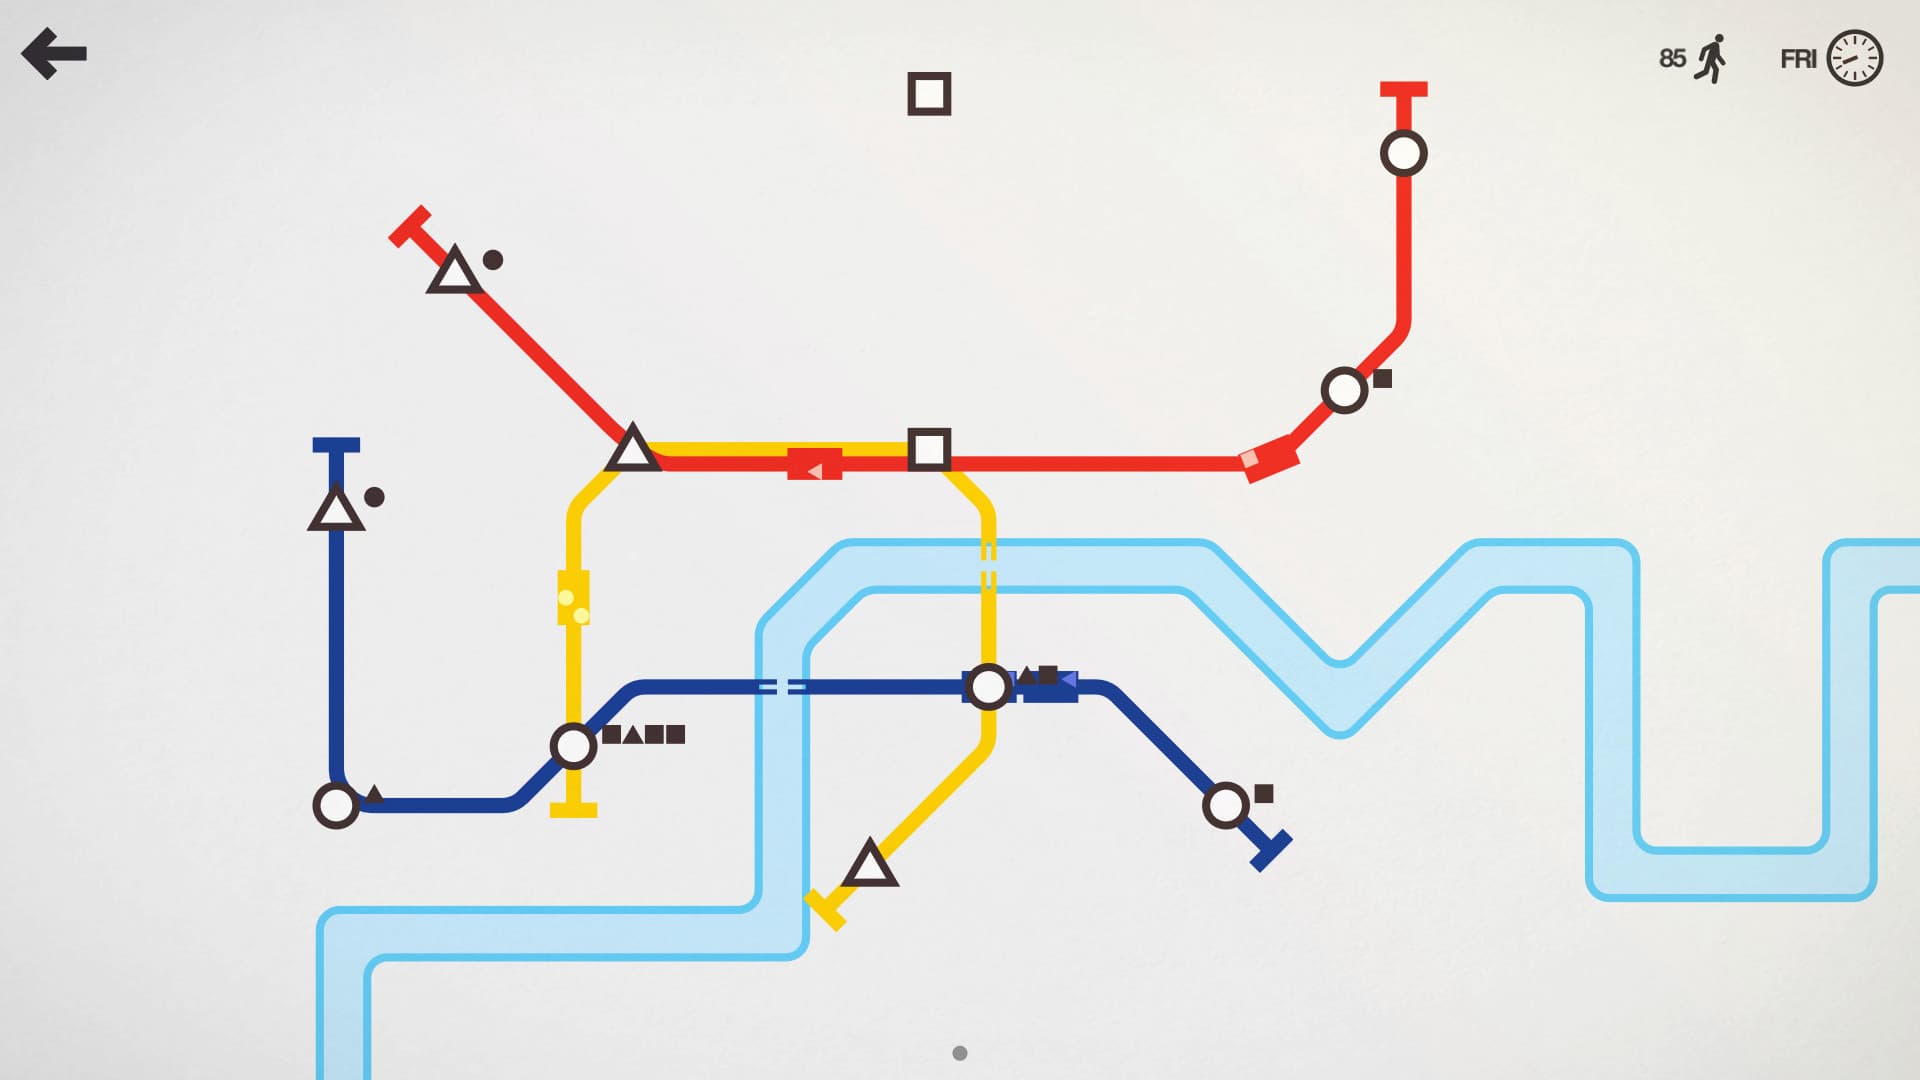 Mini Metro game